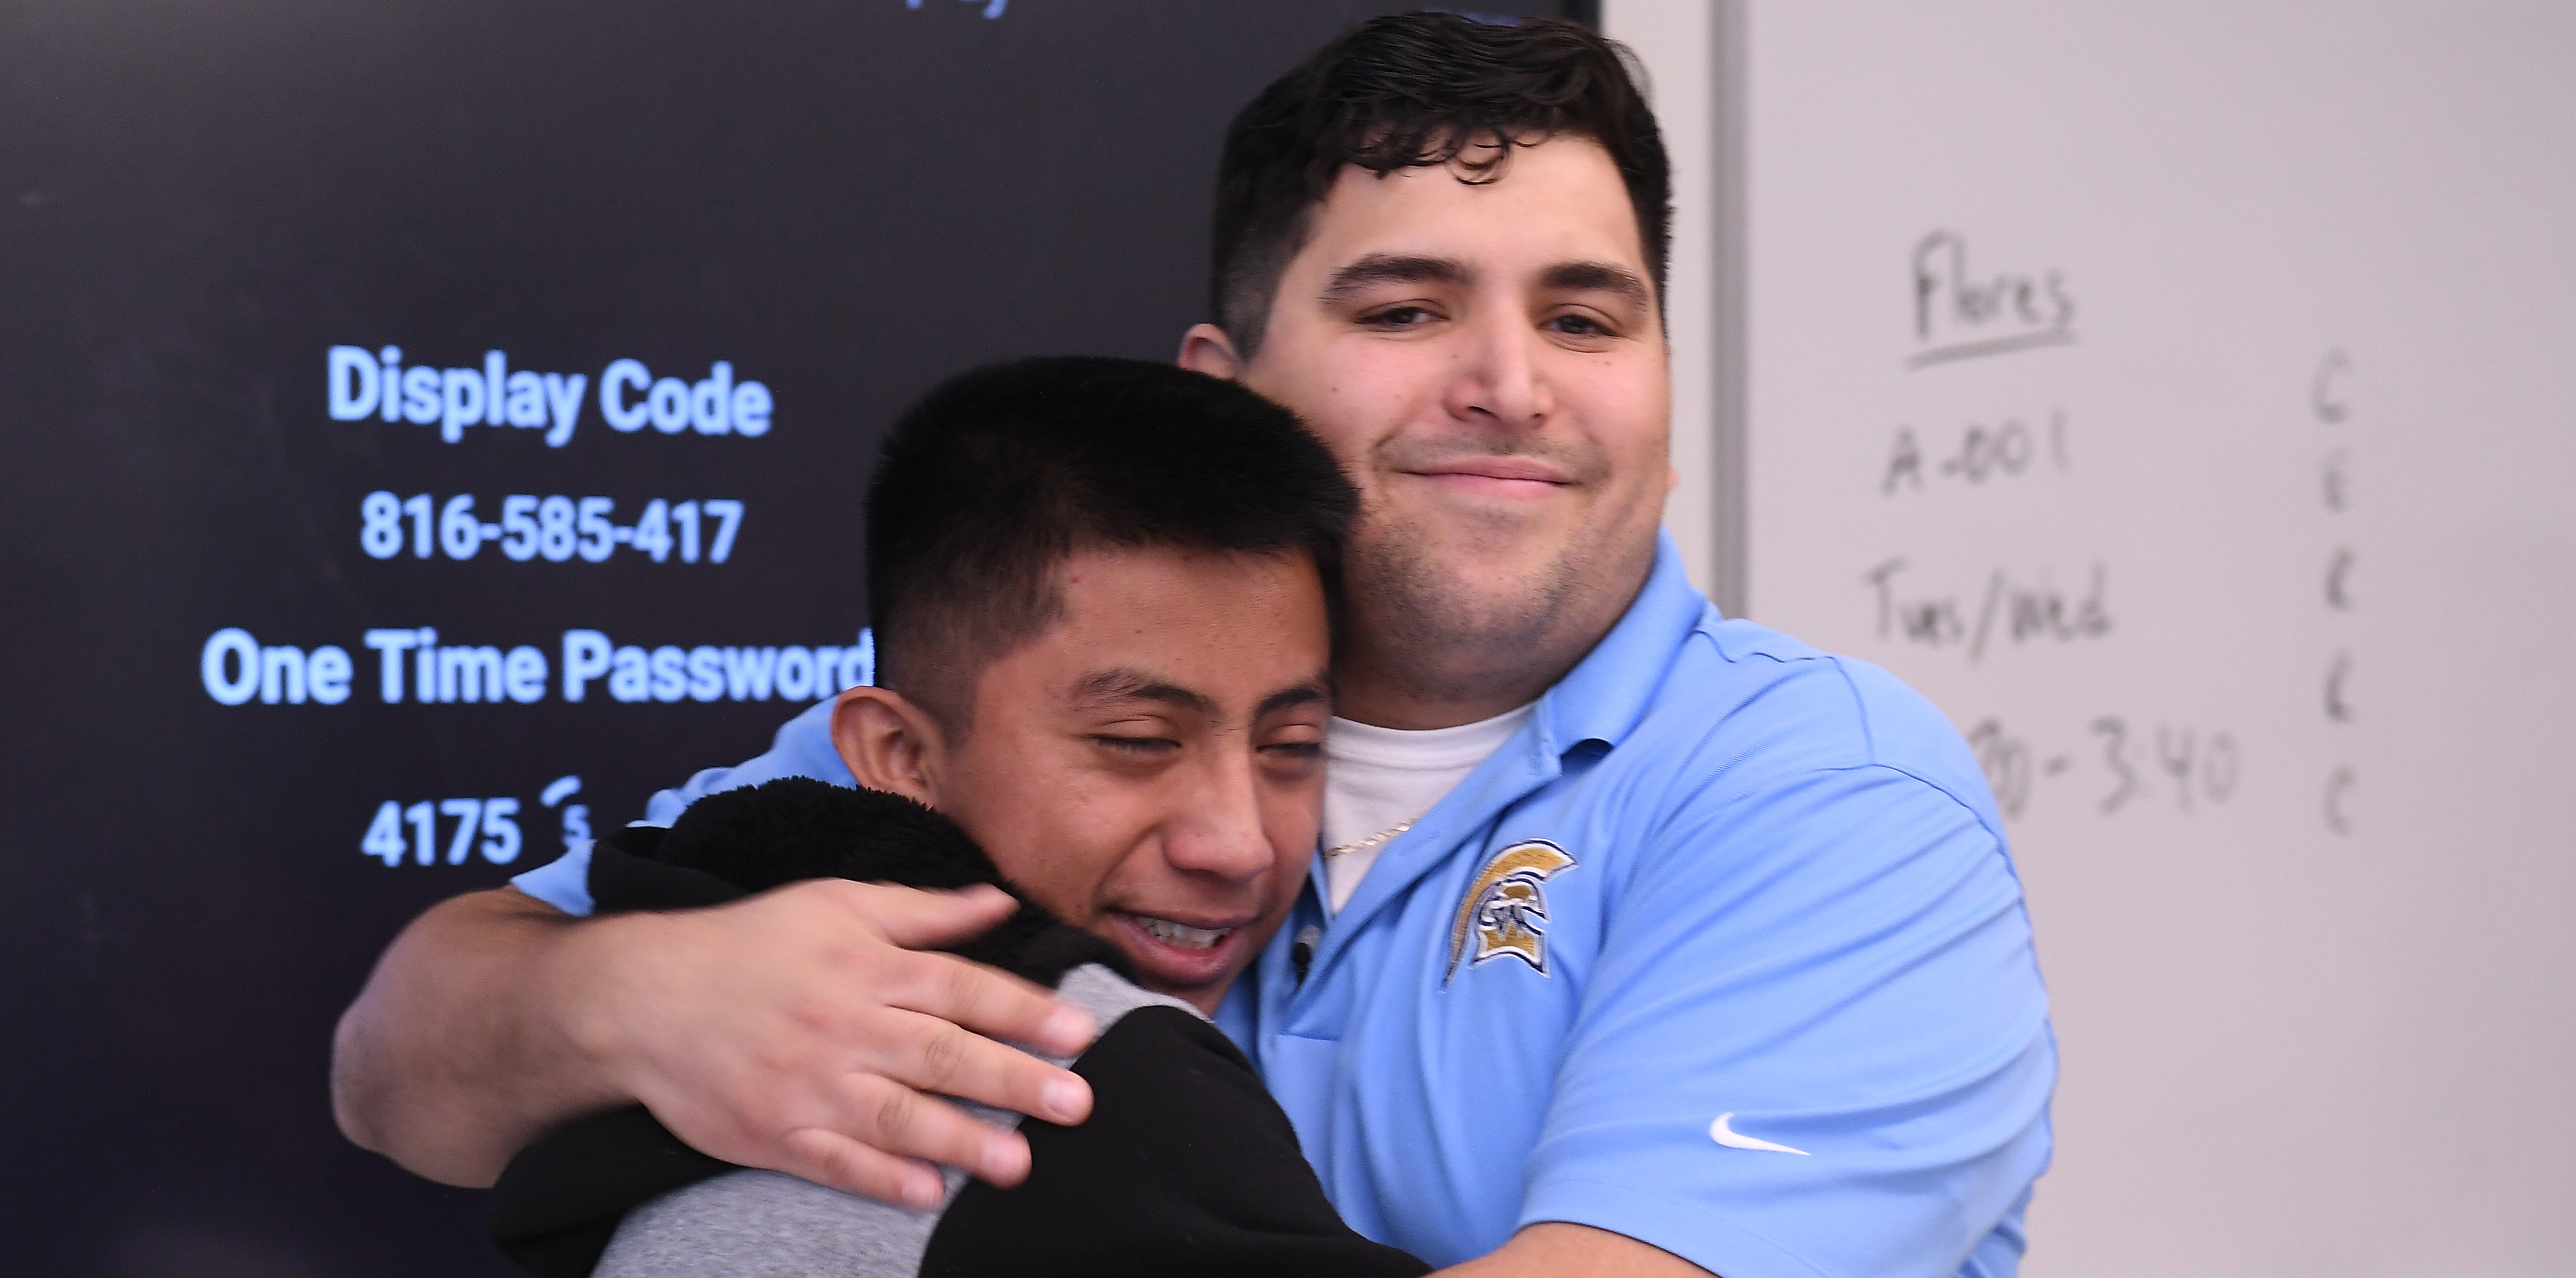 Caleb Flores abrazando a uno de sus alumnos